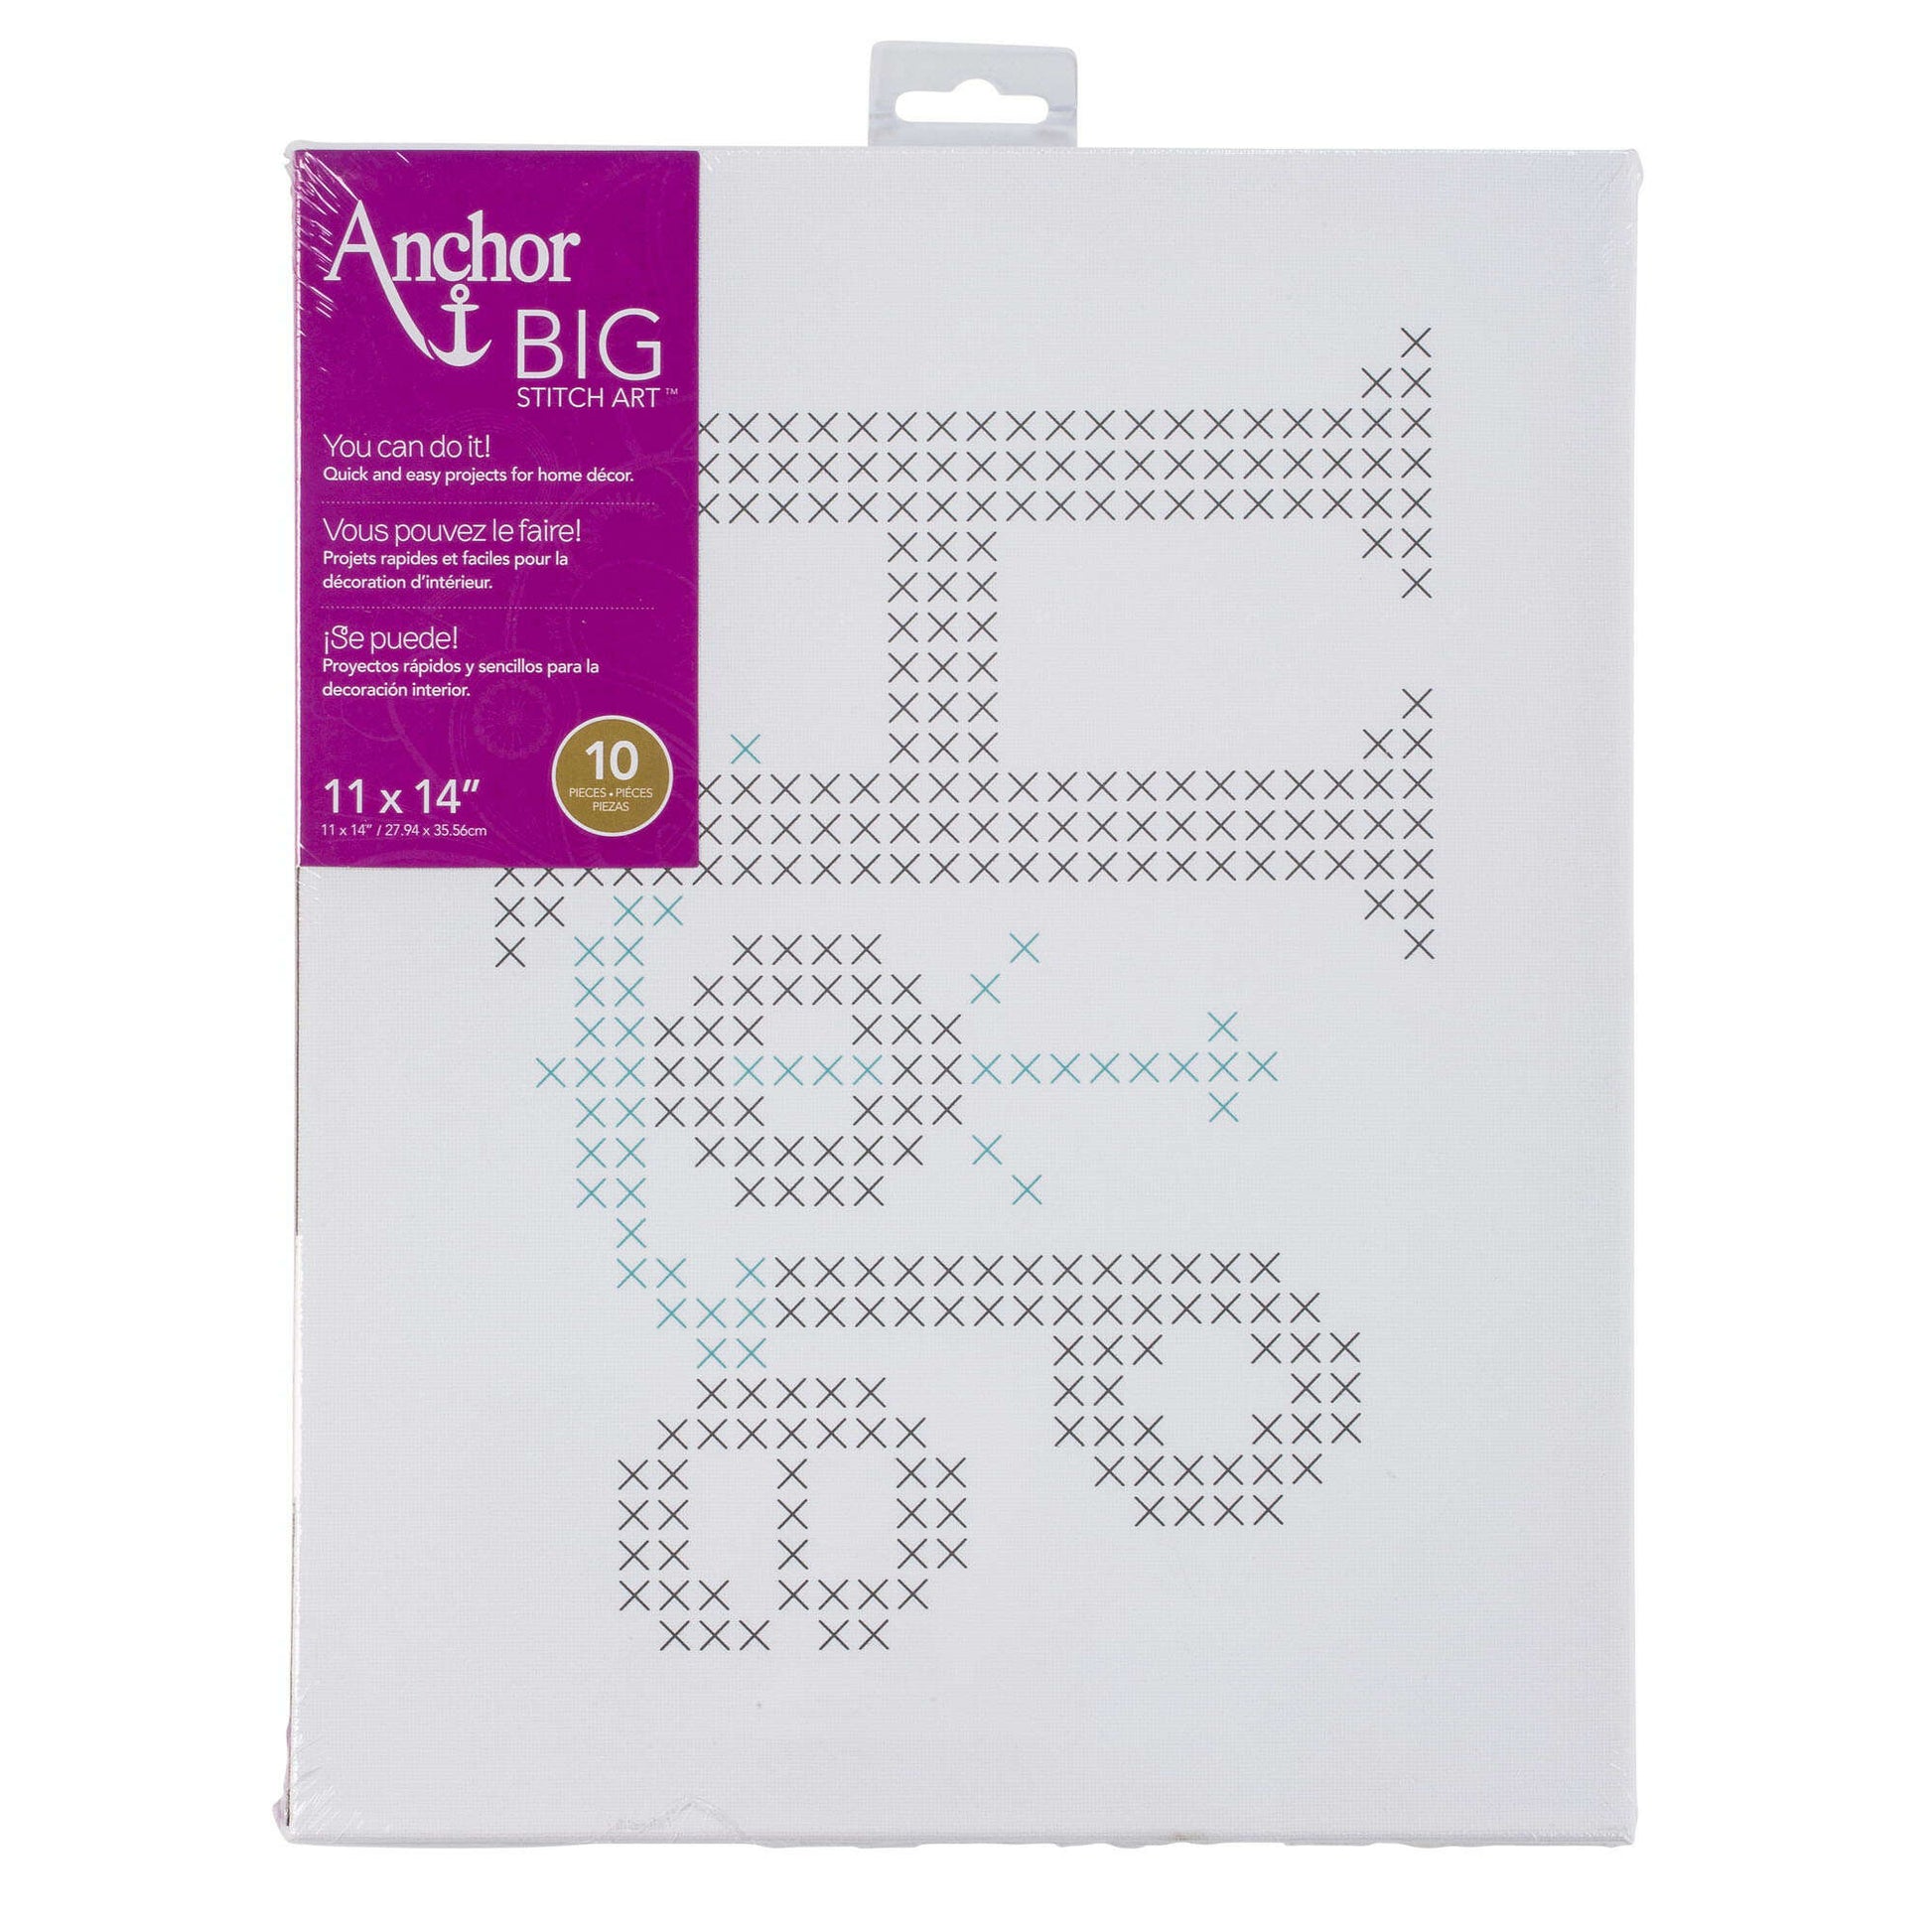 Anchor Big Stitch Art 11" x 14" - Clearance Items*